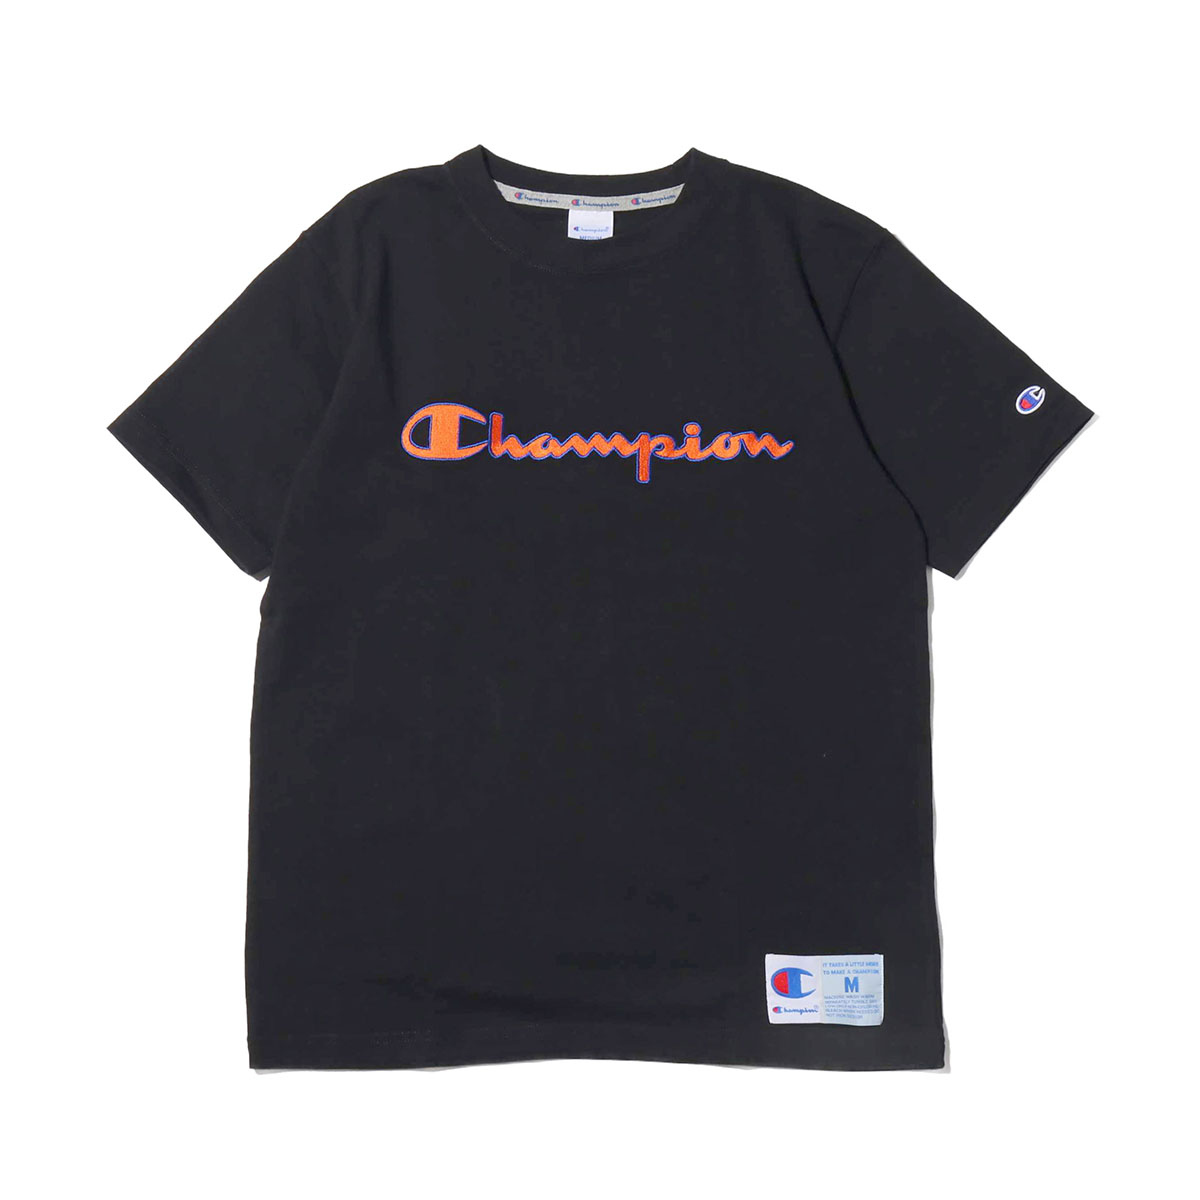 black and orange champion shirt